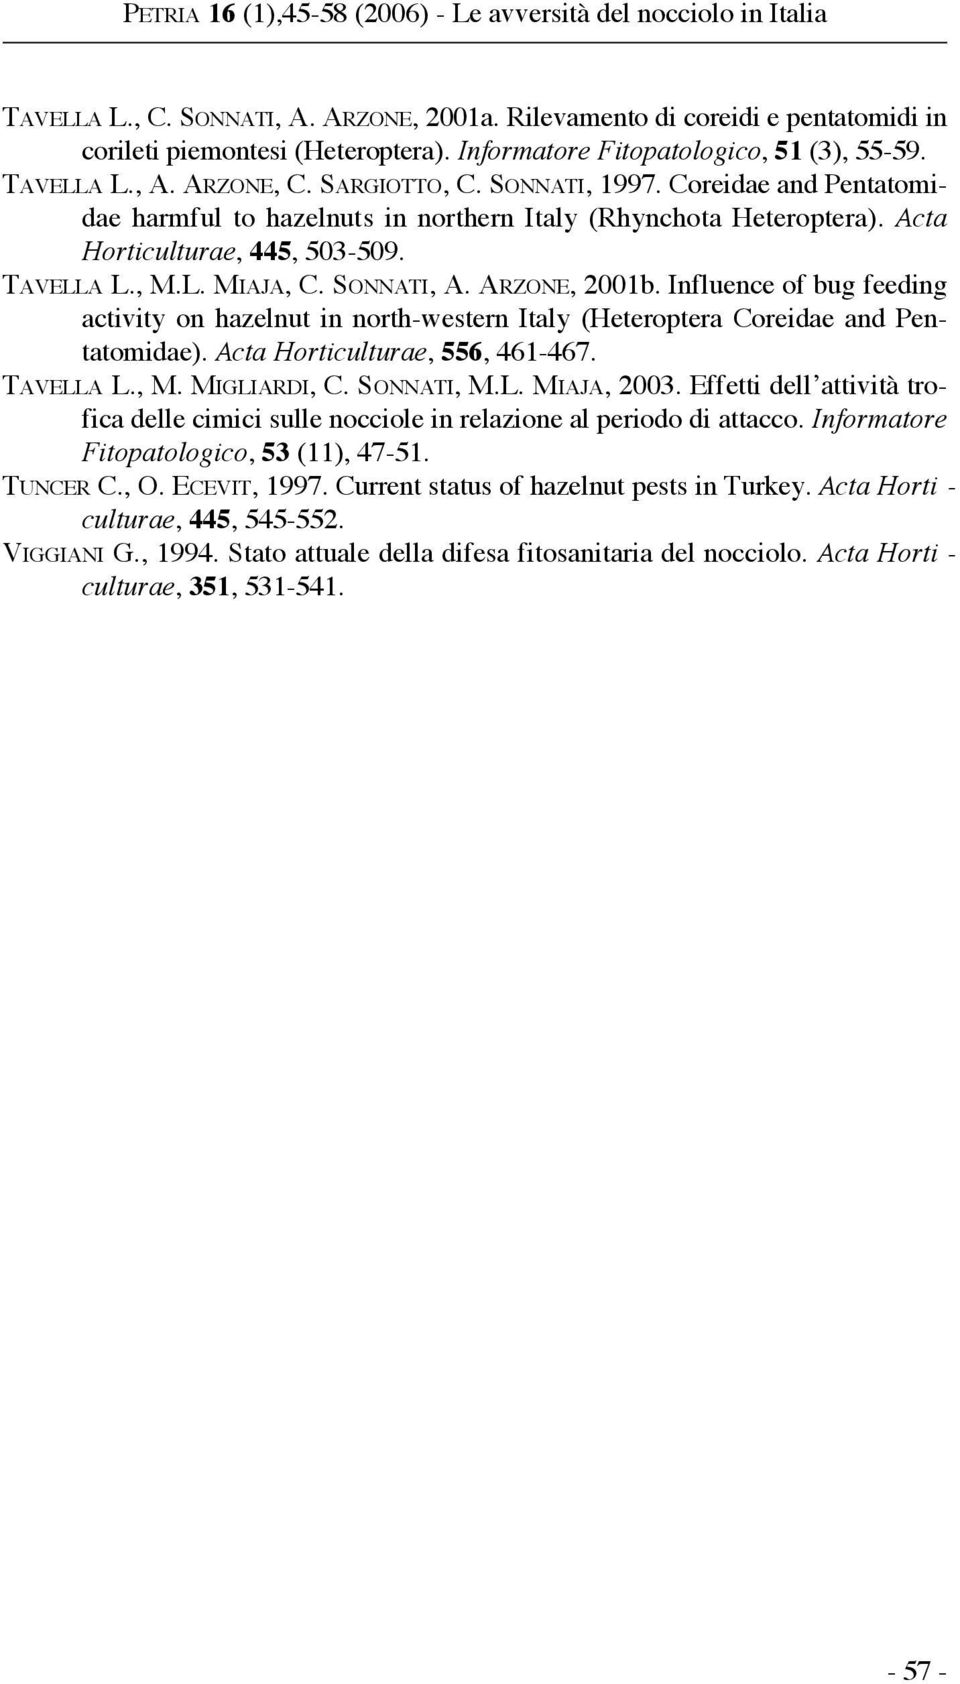 A c t a Horticulturae, 445, 503-509. TAVELLA L., M.L. MIAJA, C. SONNATI, A. ARZONE, 2001b. Influence of bug feeding activity on hazelnut in north-western Italy (Heteroptera Coreidae and Pentatomidae).